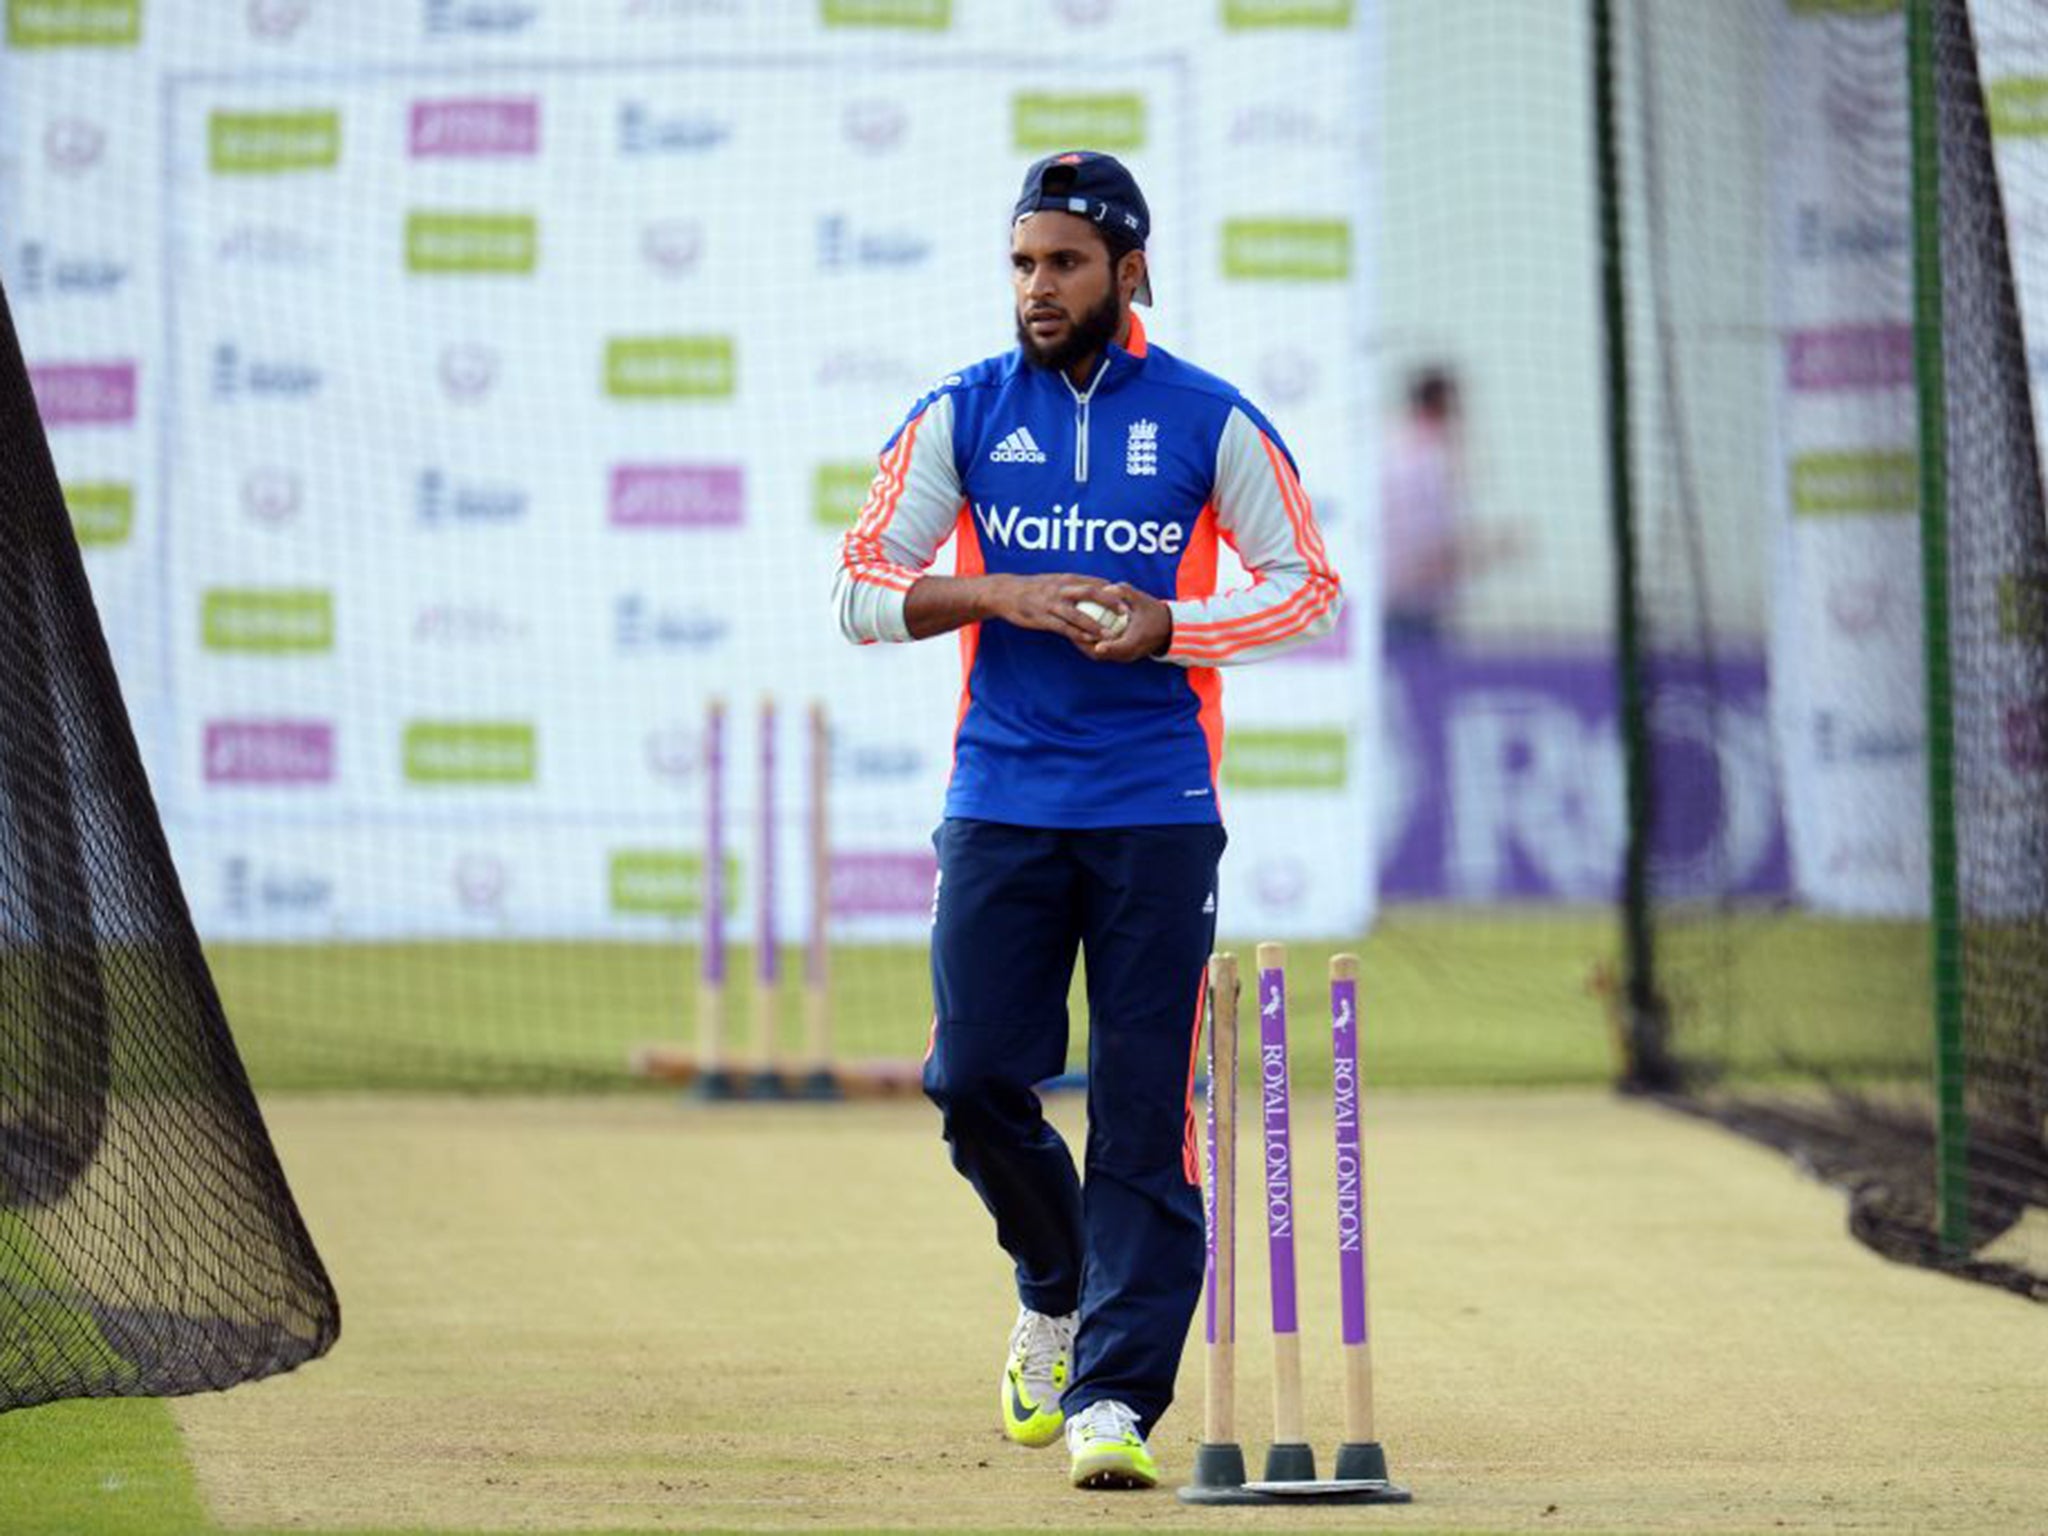 Adil Rashid trains at Headingley ahead of his first ODI on his home ground